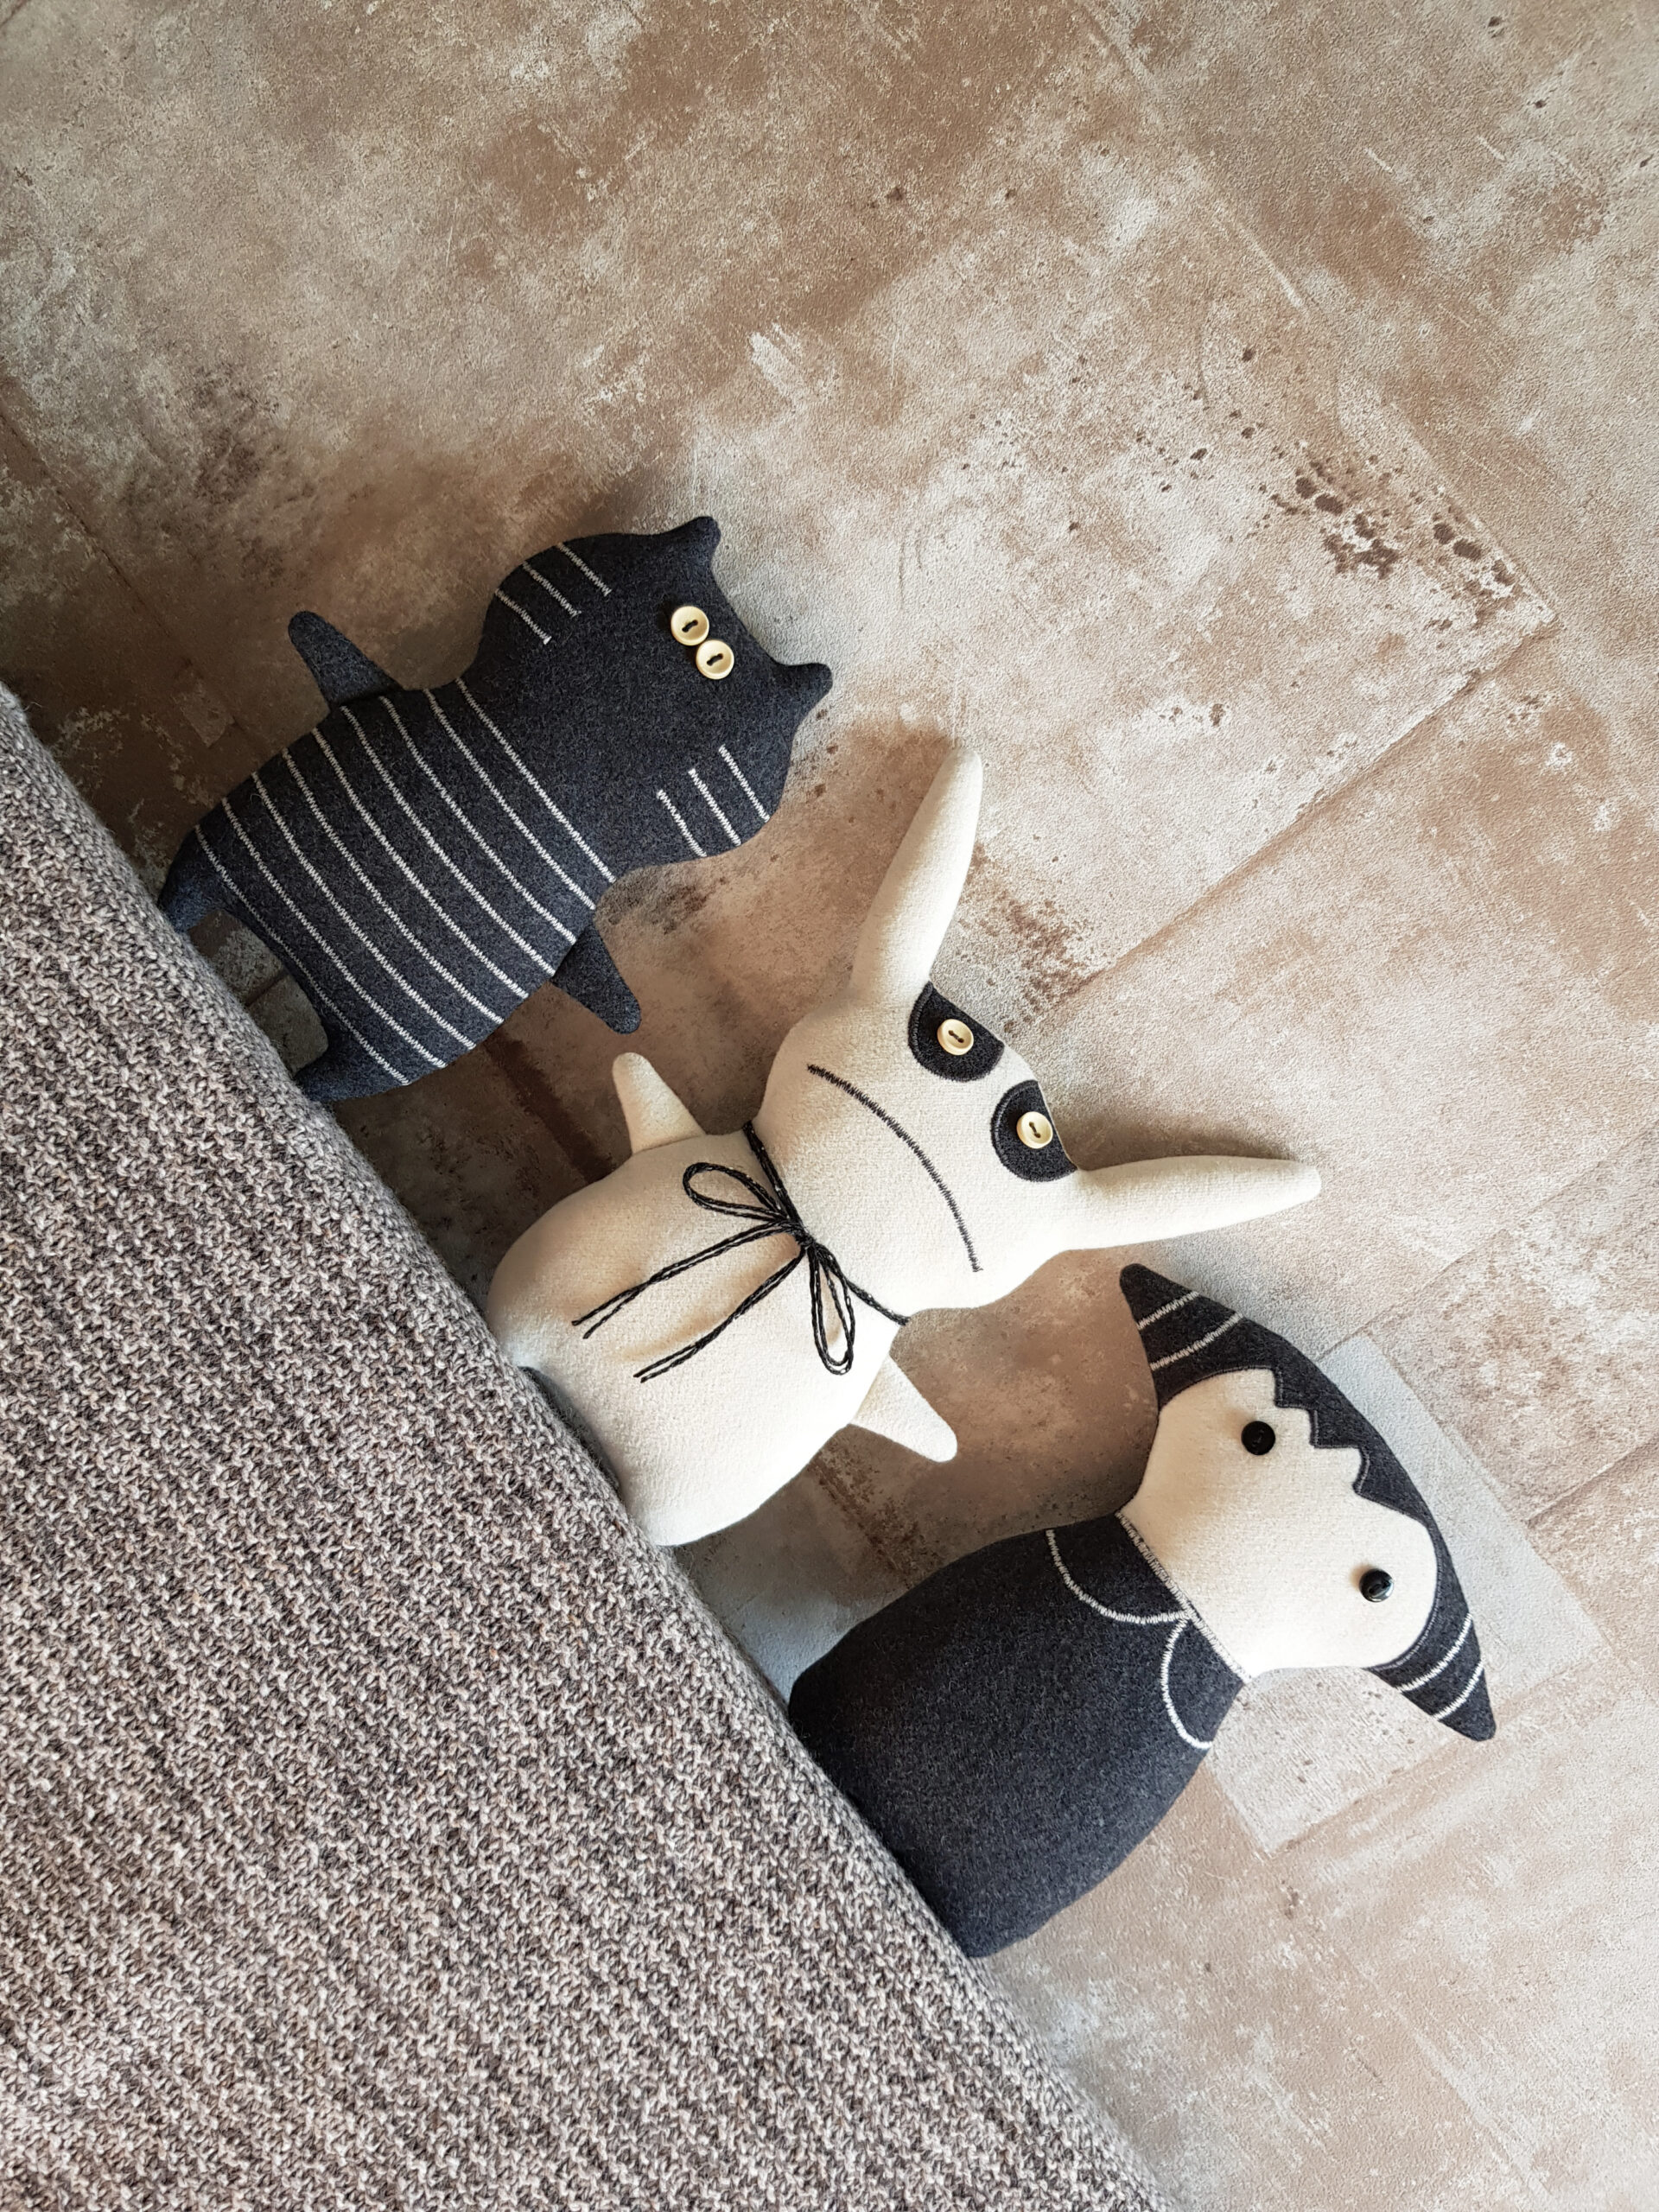 2in1 Cat bat & bunny doll sewing pattern PDF Voodoo creepy - Inspire Uplift